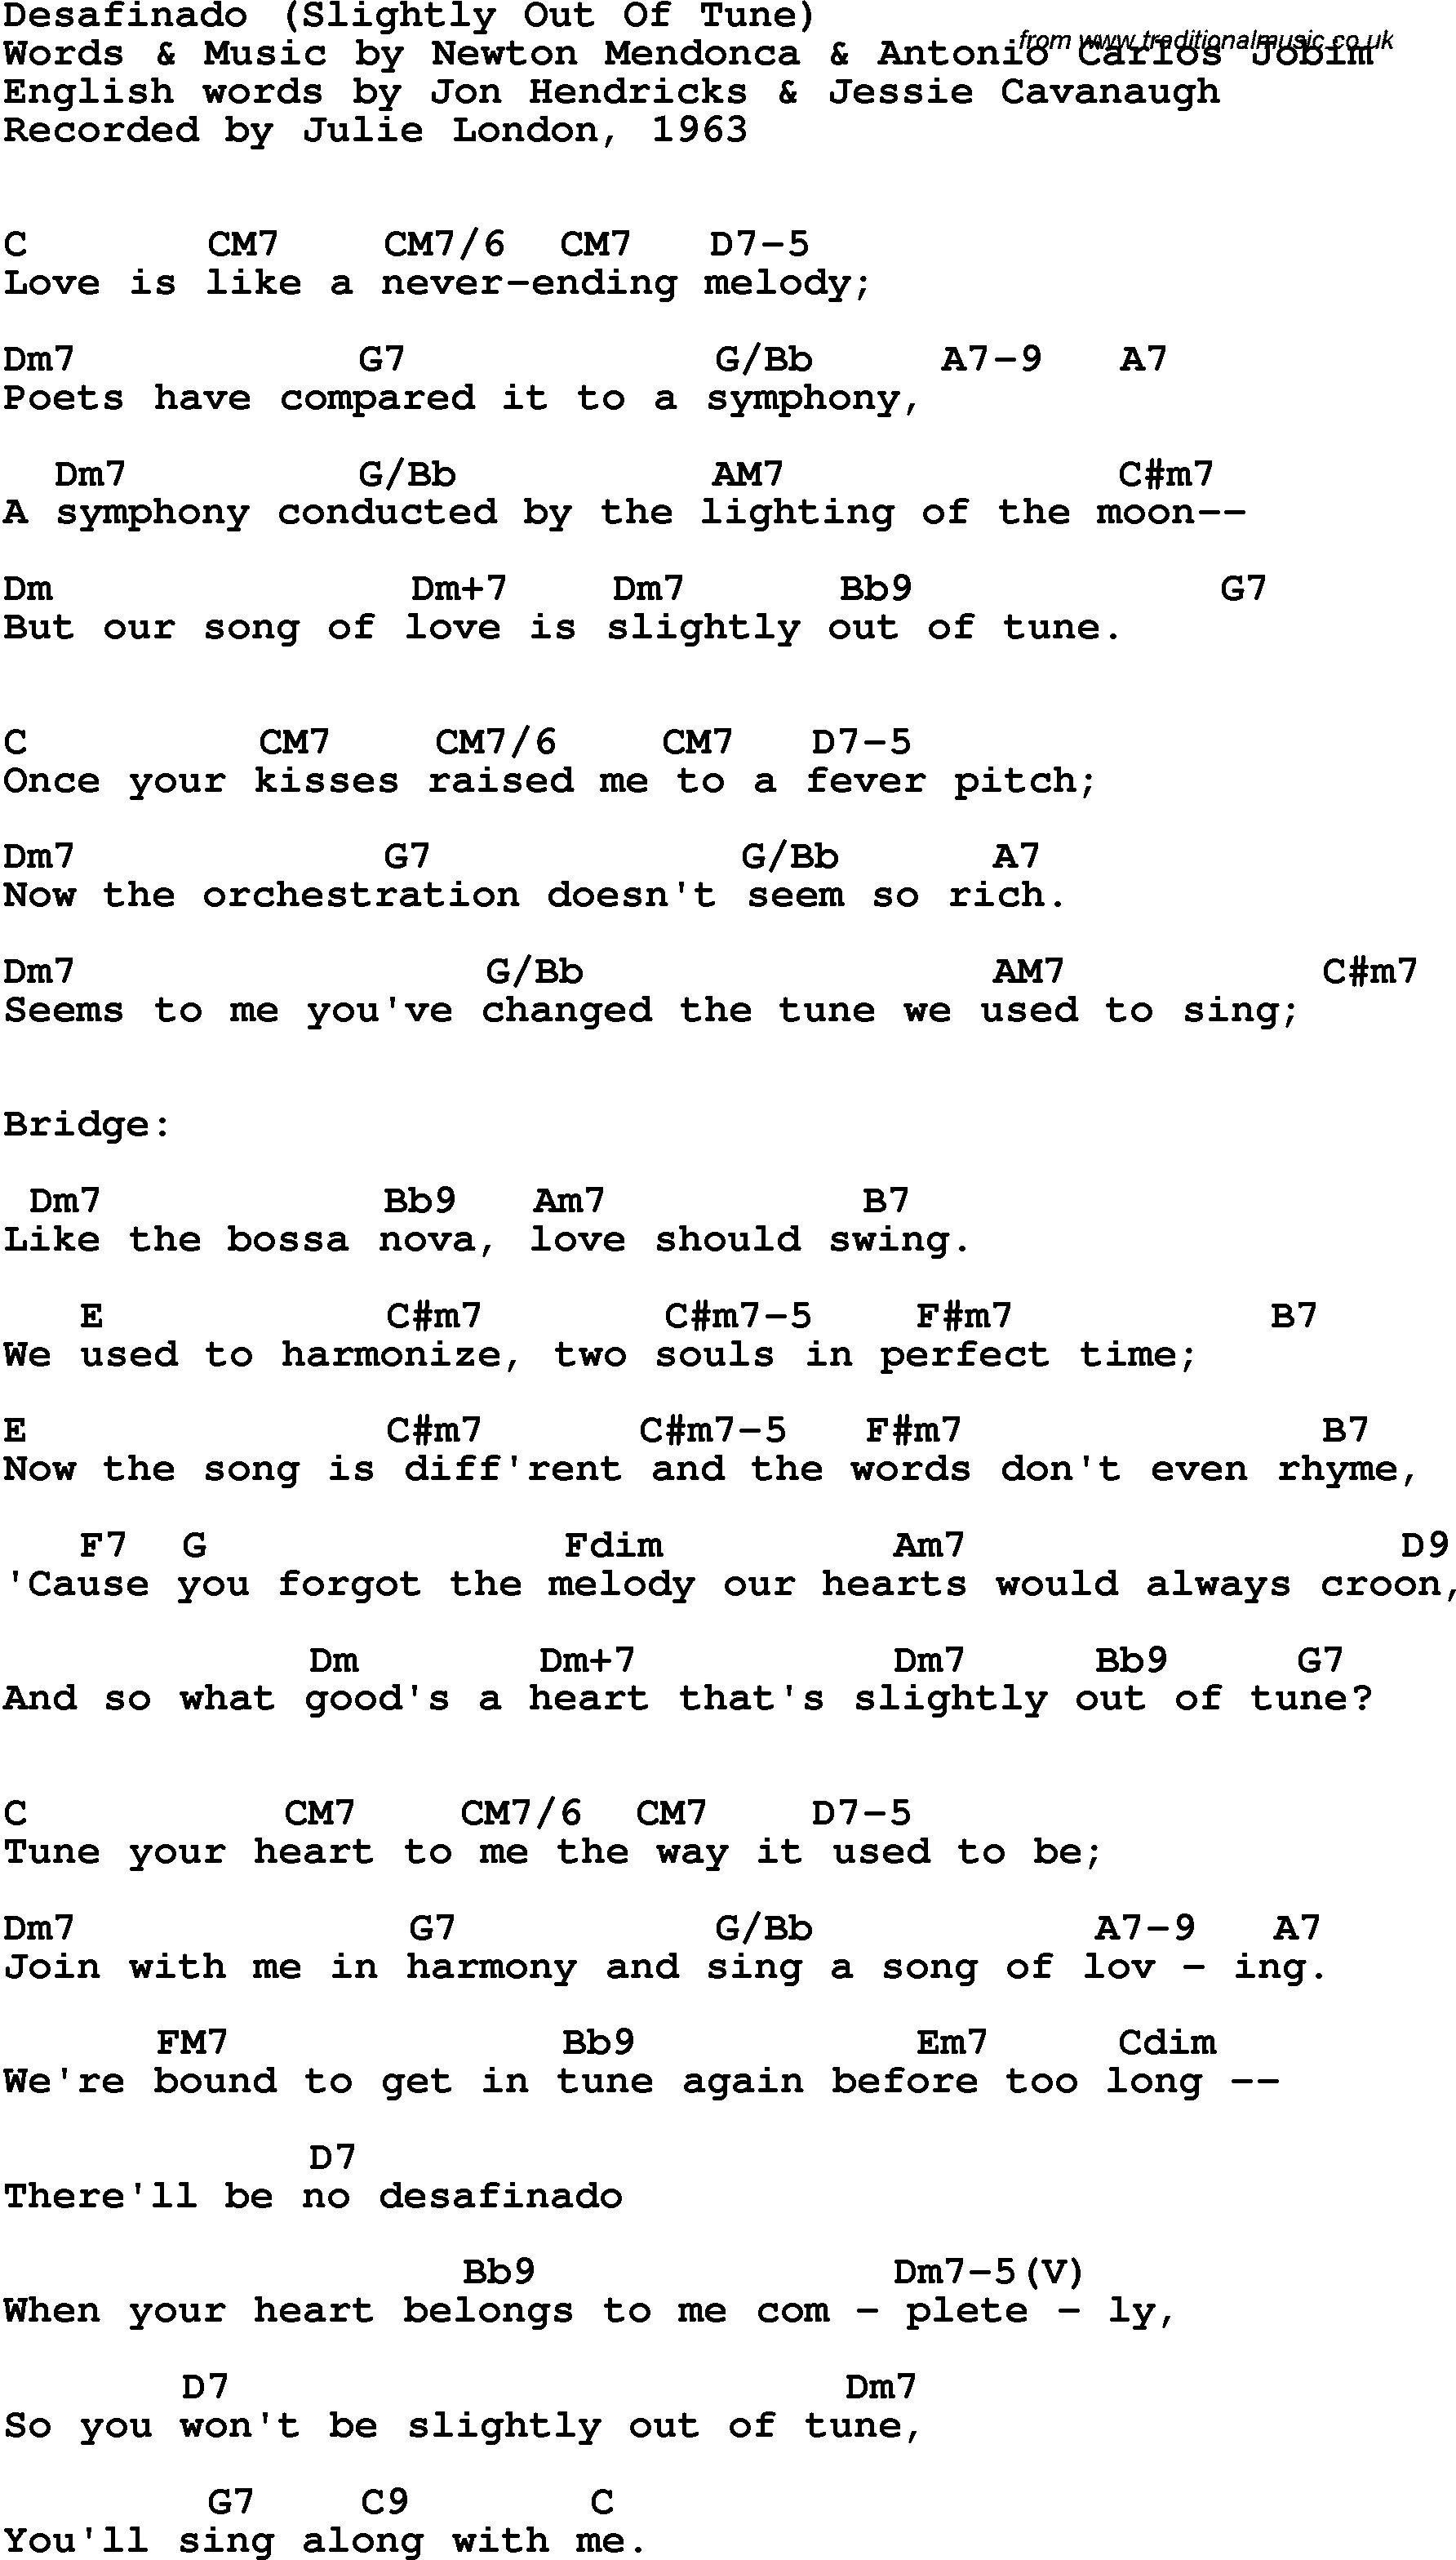 Song Lyrics with guitar chords for Desafinado - Julie London, 1963